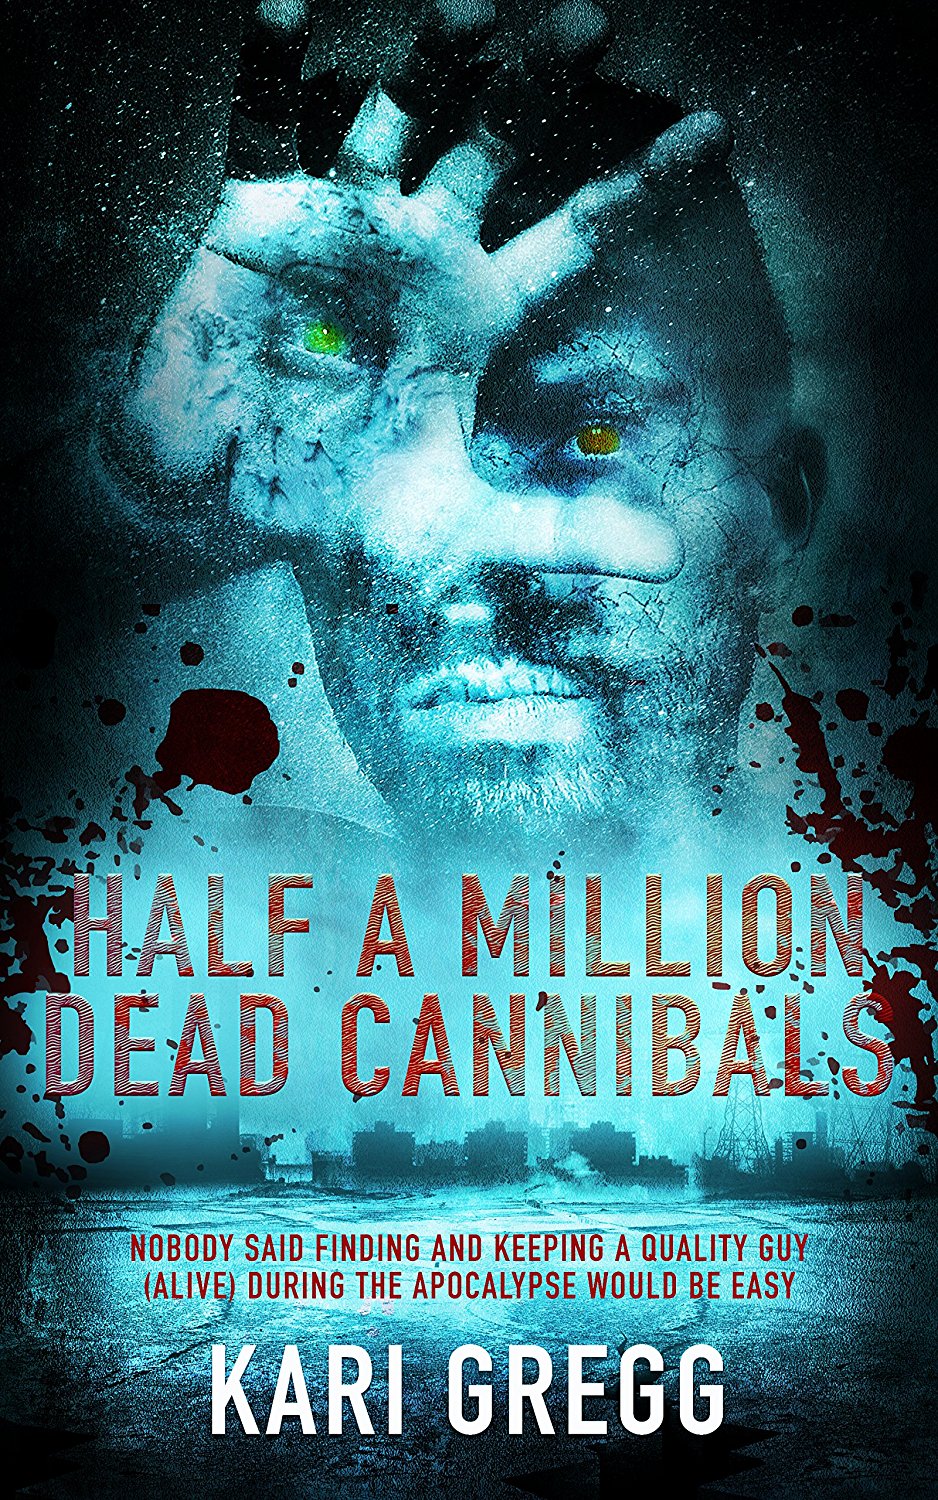 Half a Million Dead Cannibals by Kari Gregg